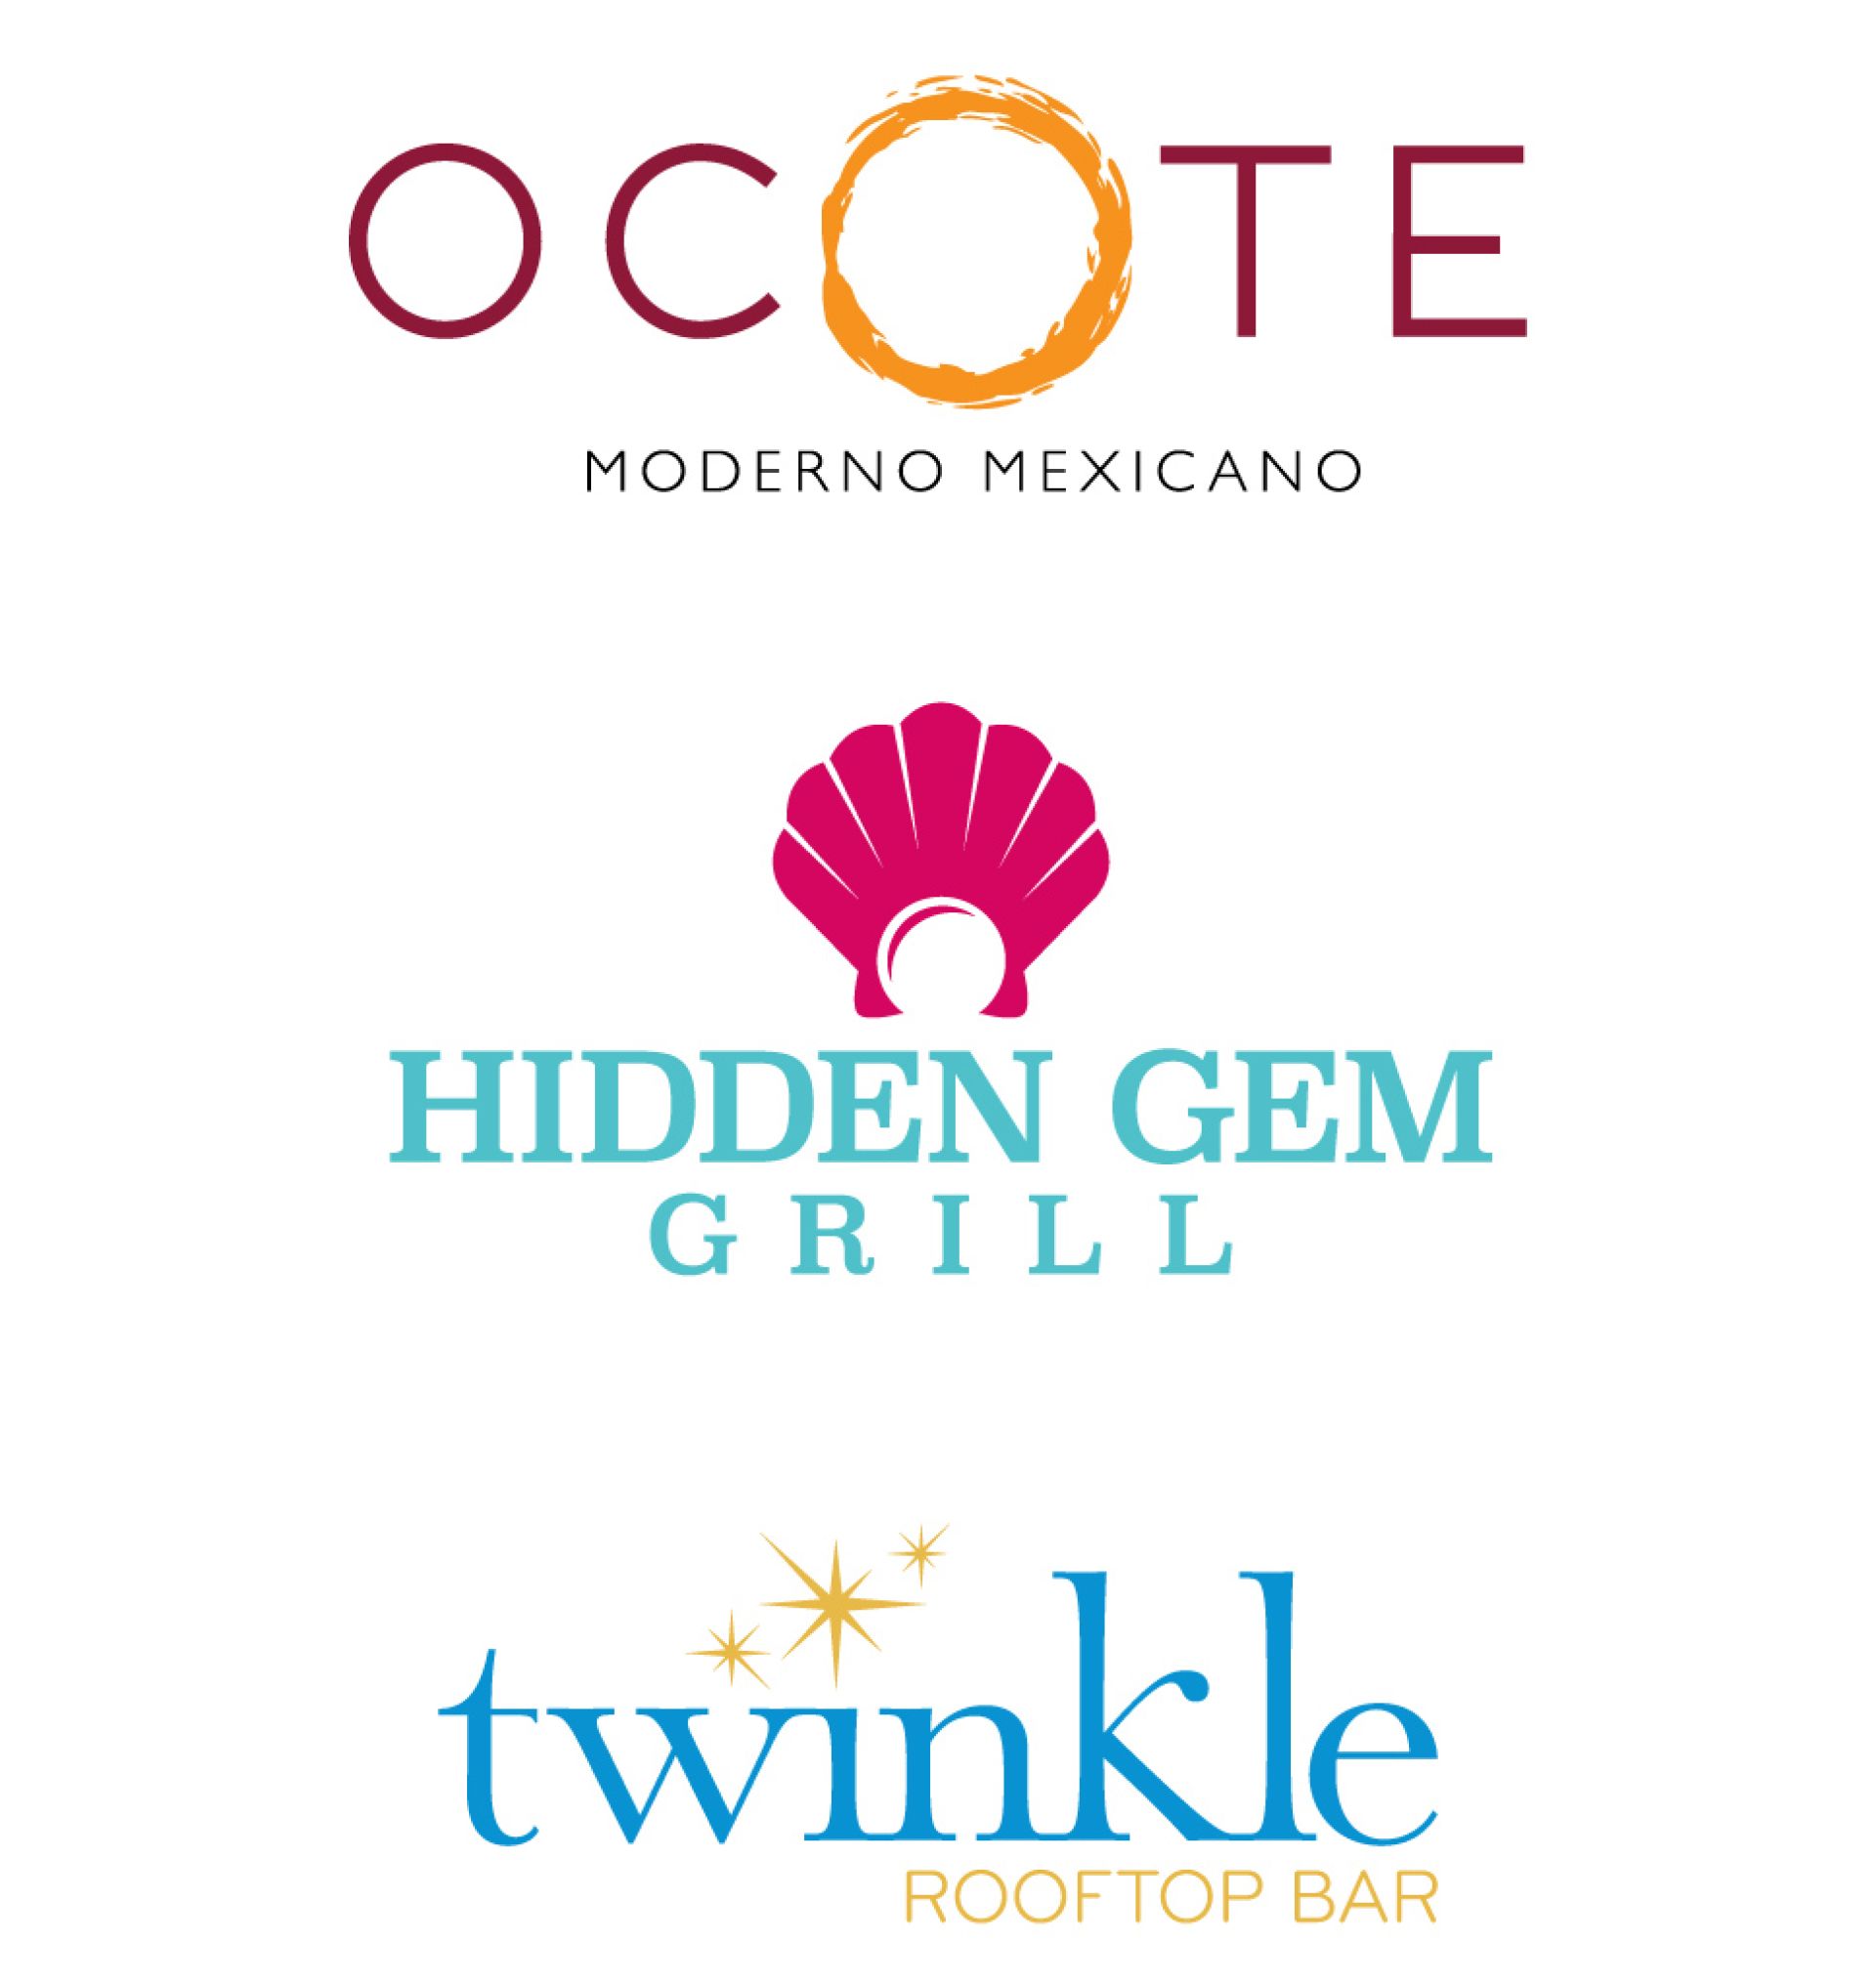 ocote, hidden gem grill, twinkle rooftop bar logos